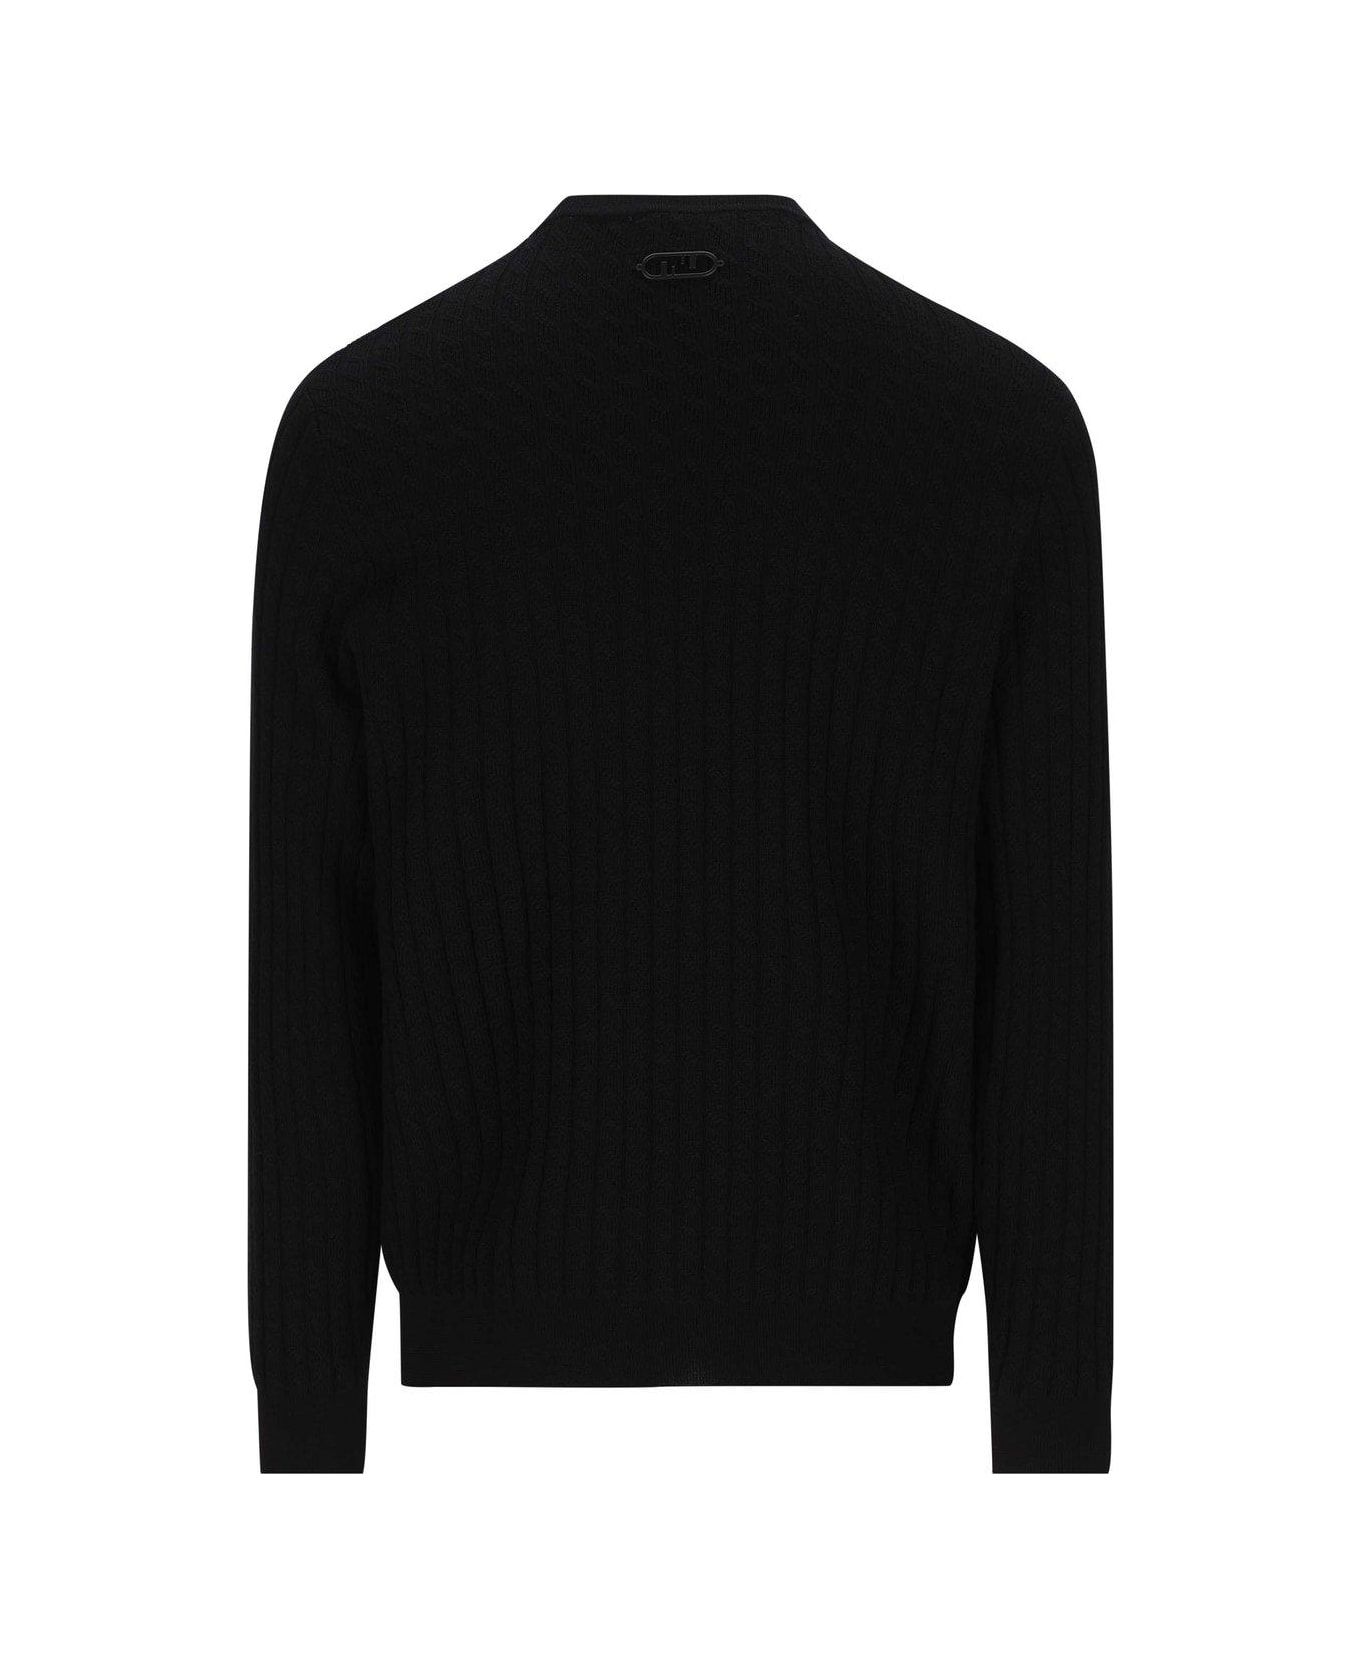 Fendi Cut-out Knitted Jumper - Black